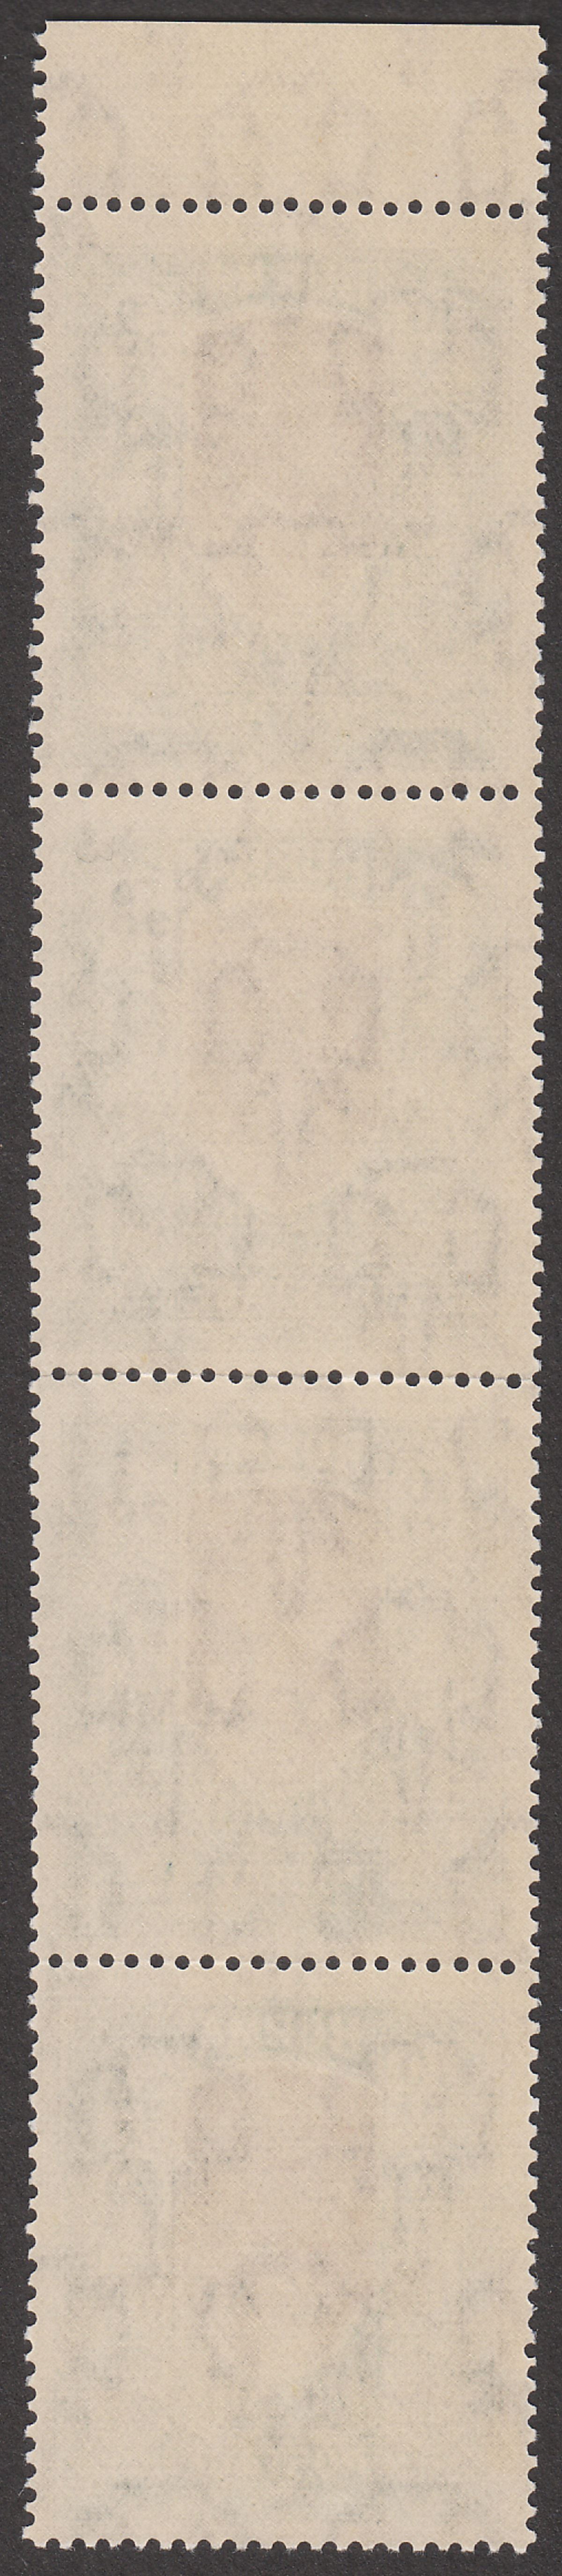 Burma 1945 KGVI Military Administration Overprint 10r Strip of 4 Mint SG50